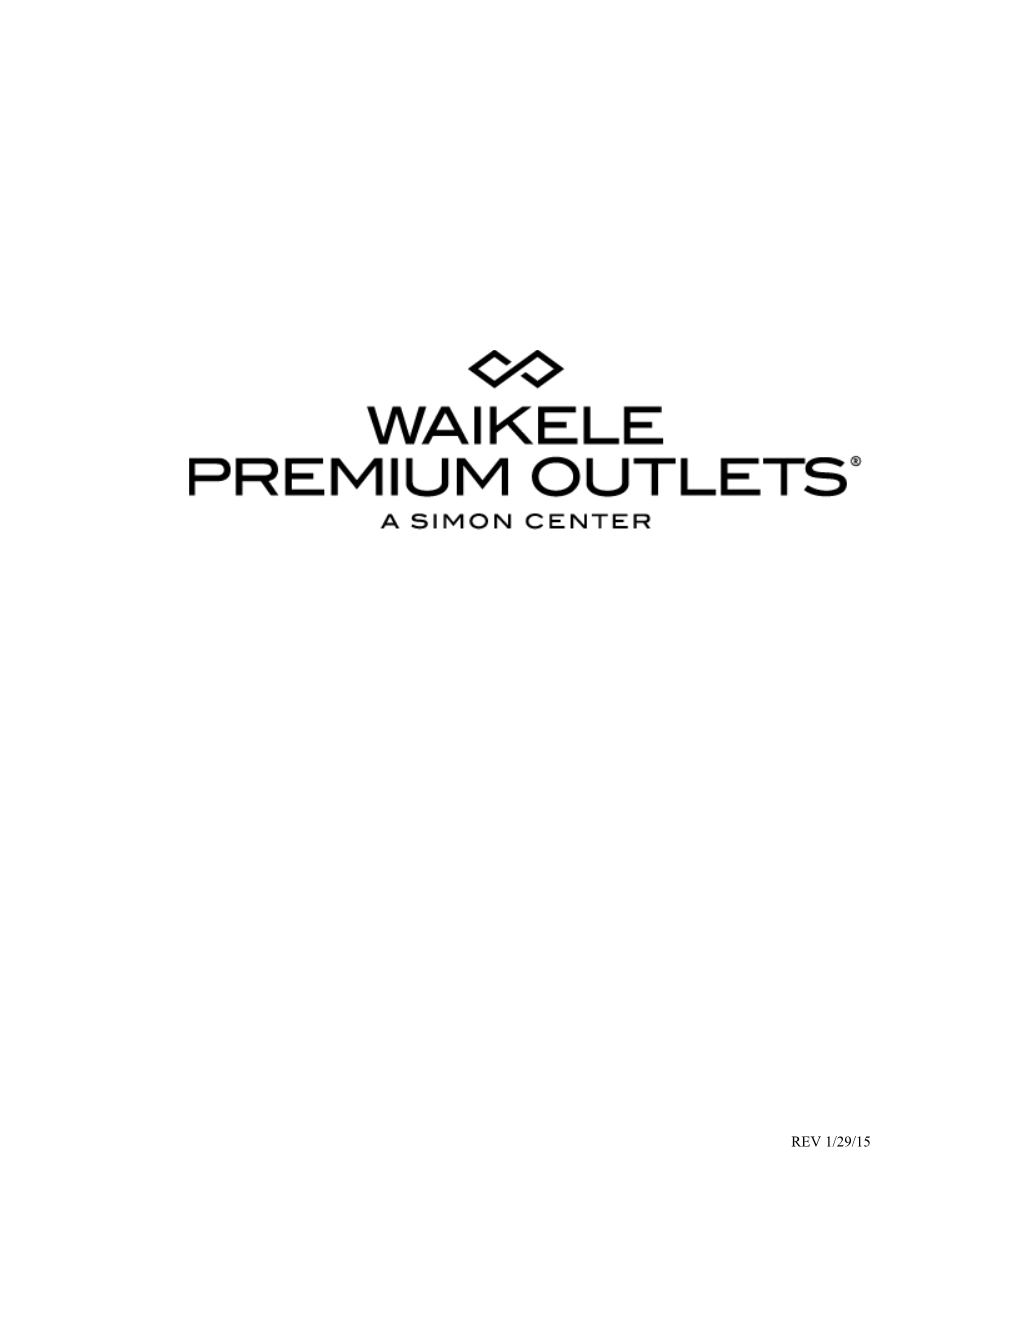 Waikele Premium Outlets